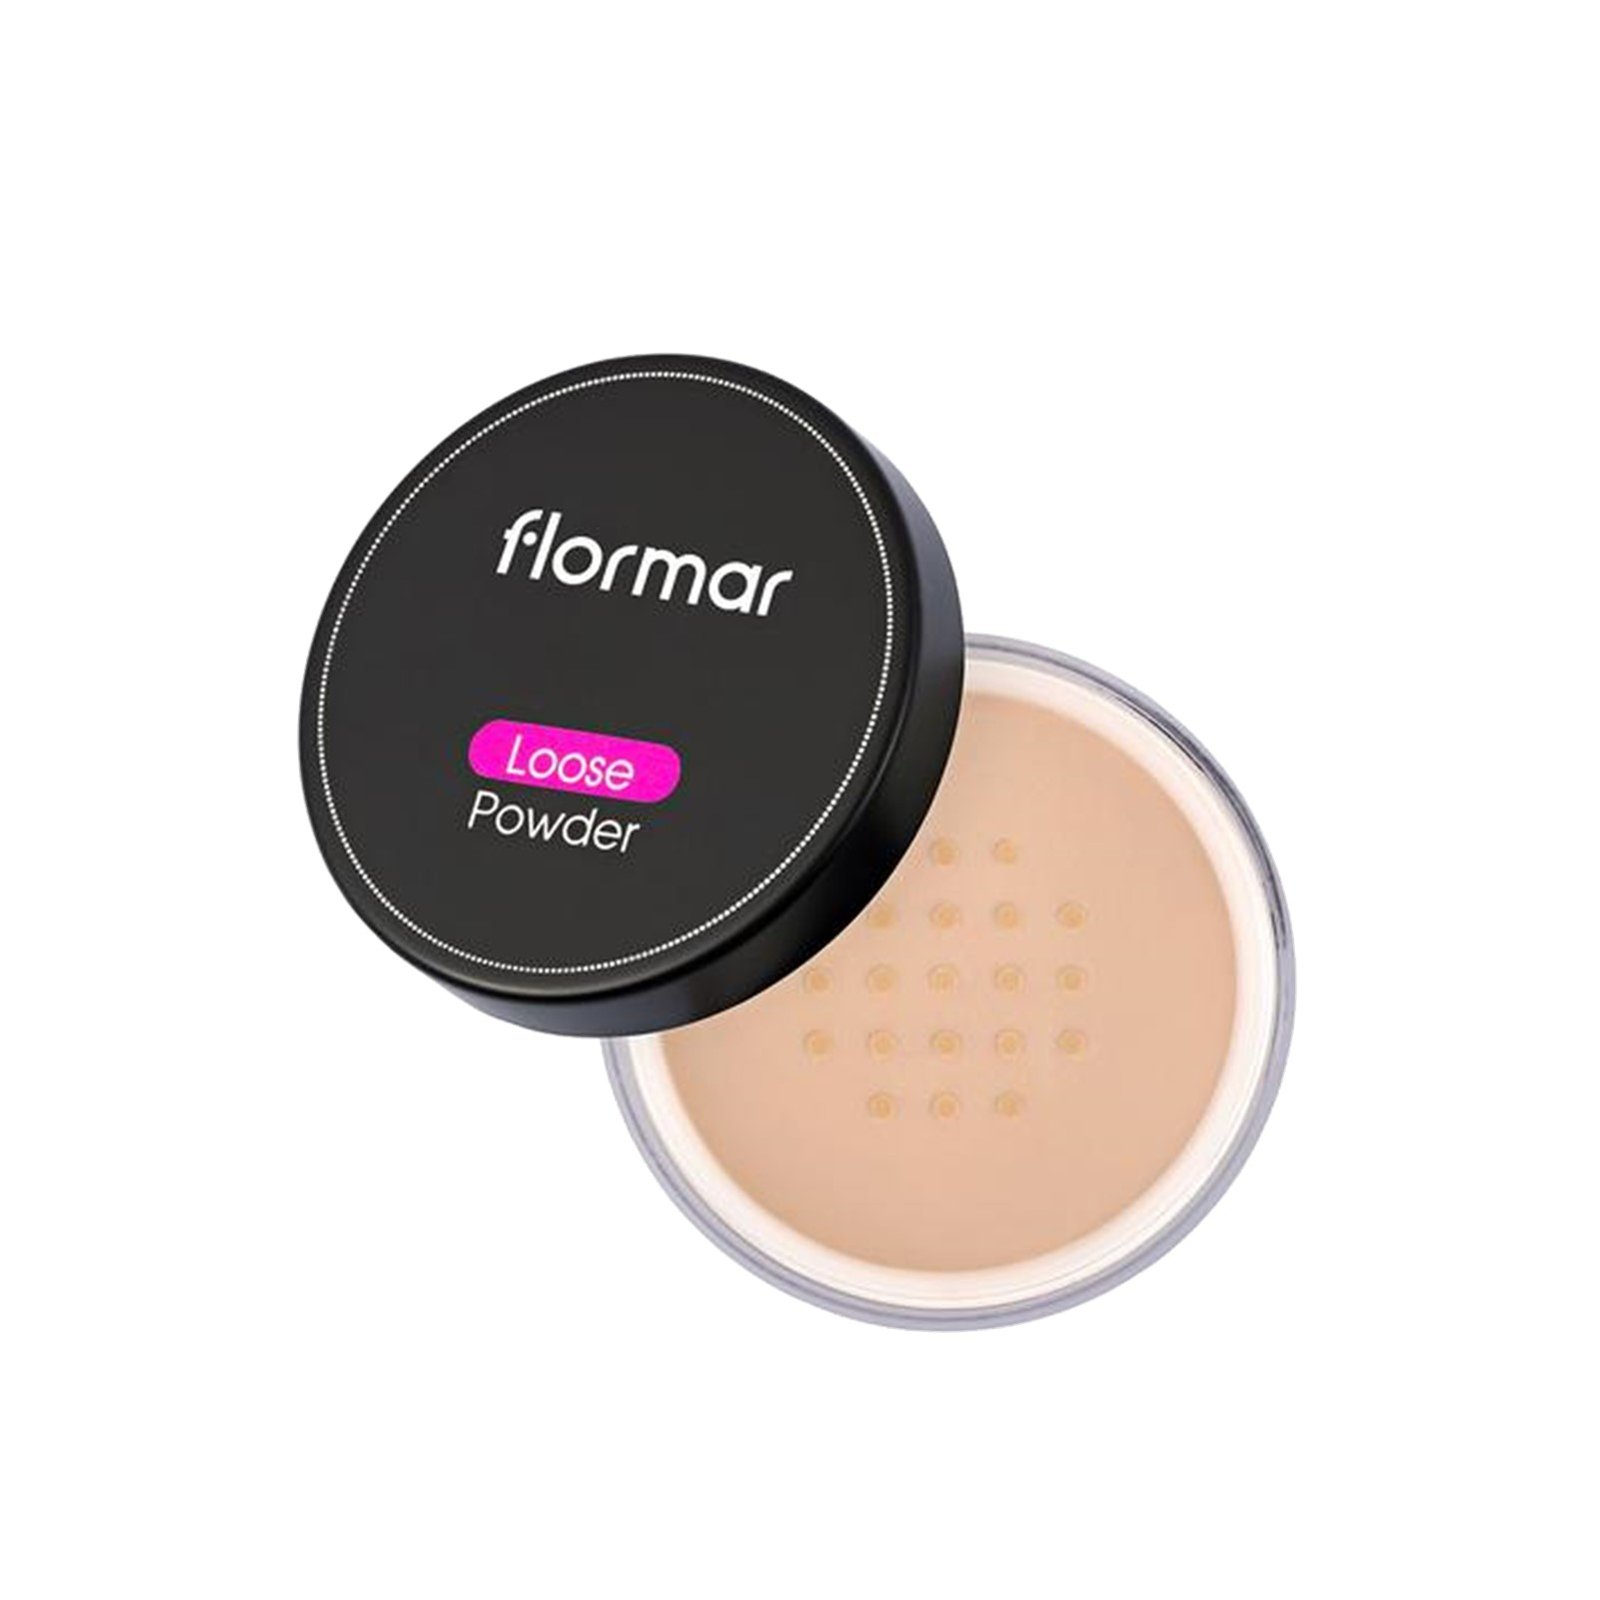 Flormar Loose Powder 03 Medium Sand 18g (0.63 oz)